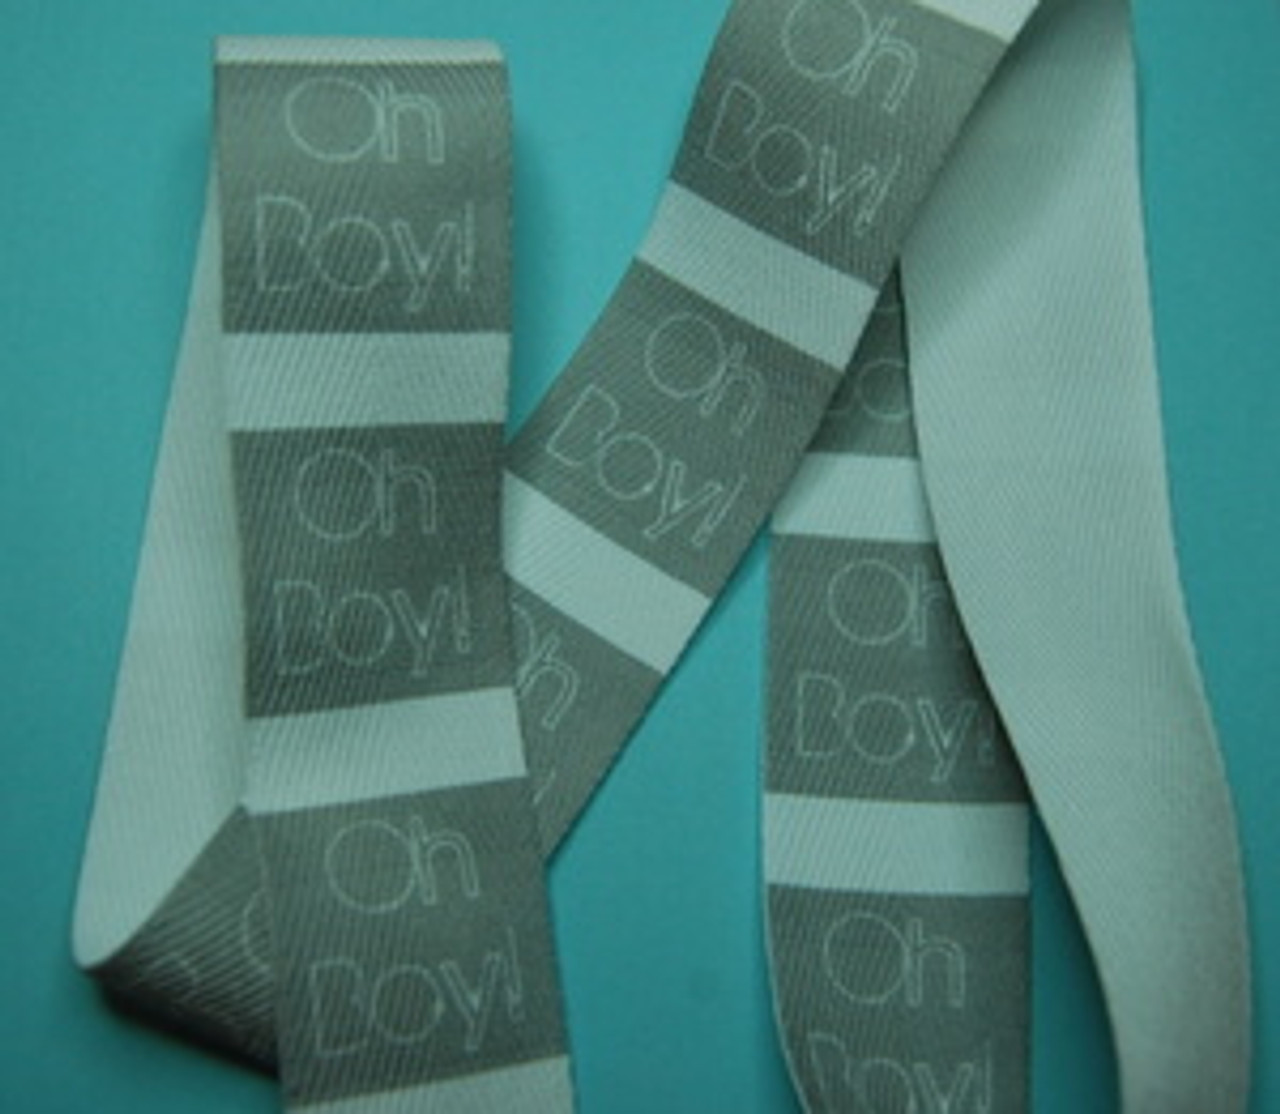 Signature Branding: Personalized Cotton Twill Ribbon Tape 